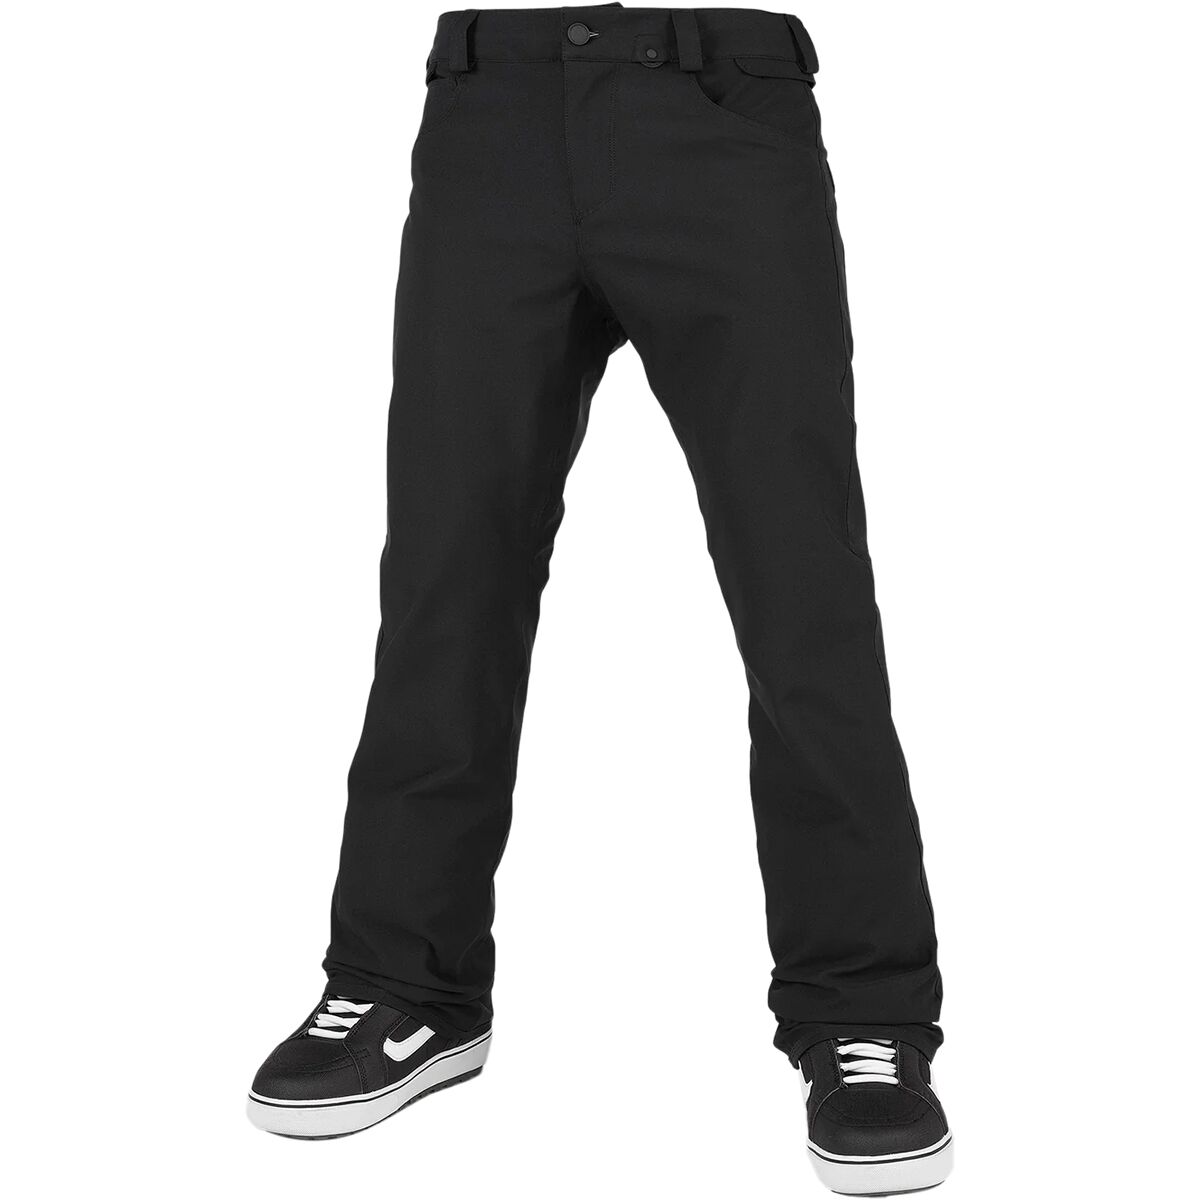 Volcom 5-Pocket Tight Pant - Men's Black